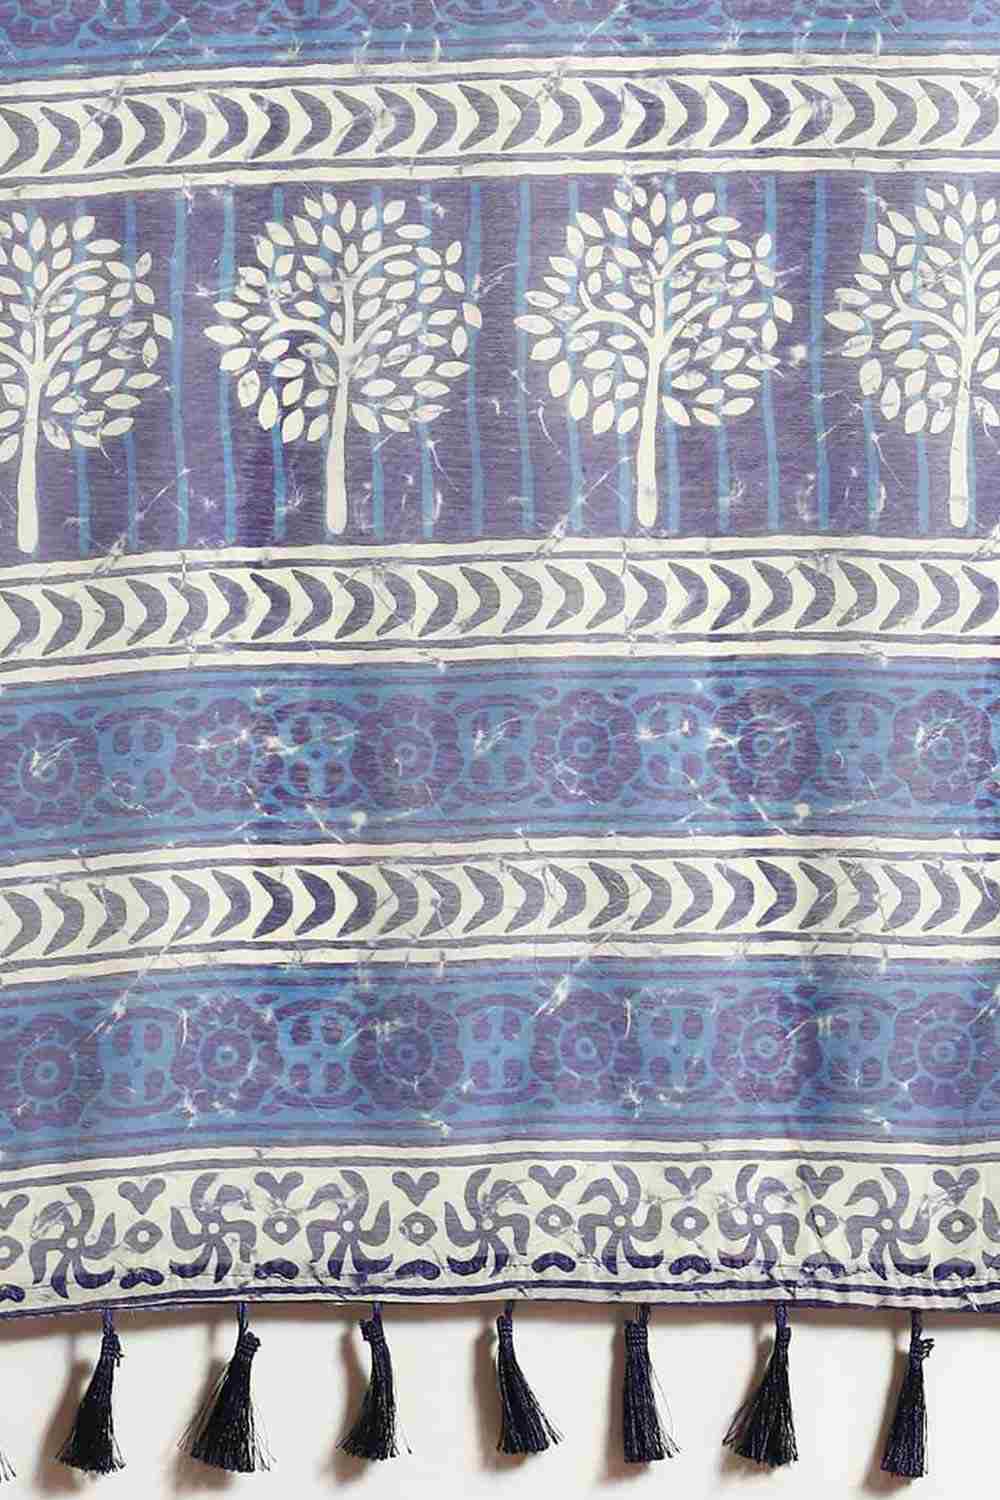 Buy Blue Cotton Block Printed Saree Online - Zoom In 